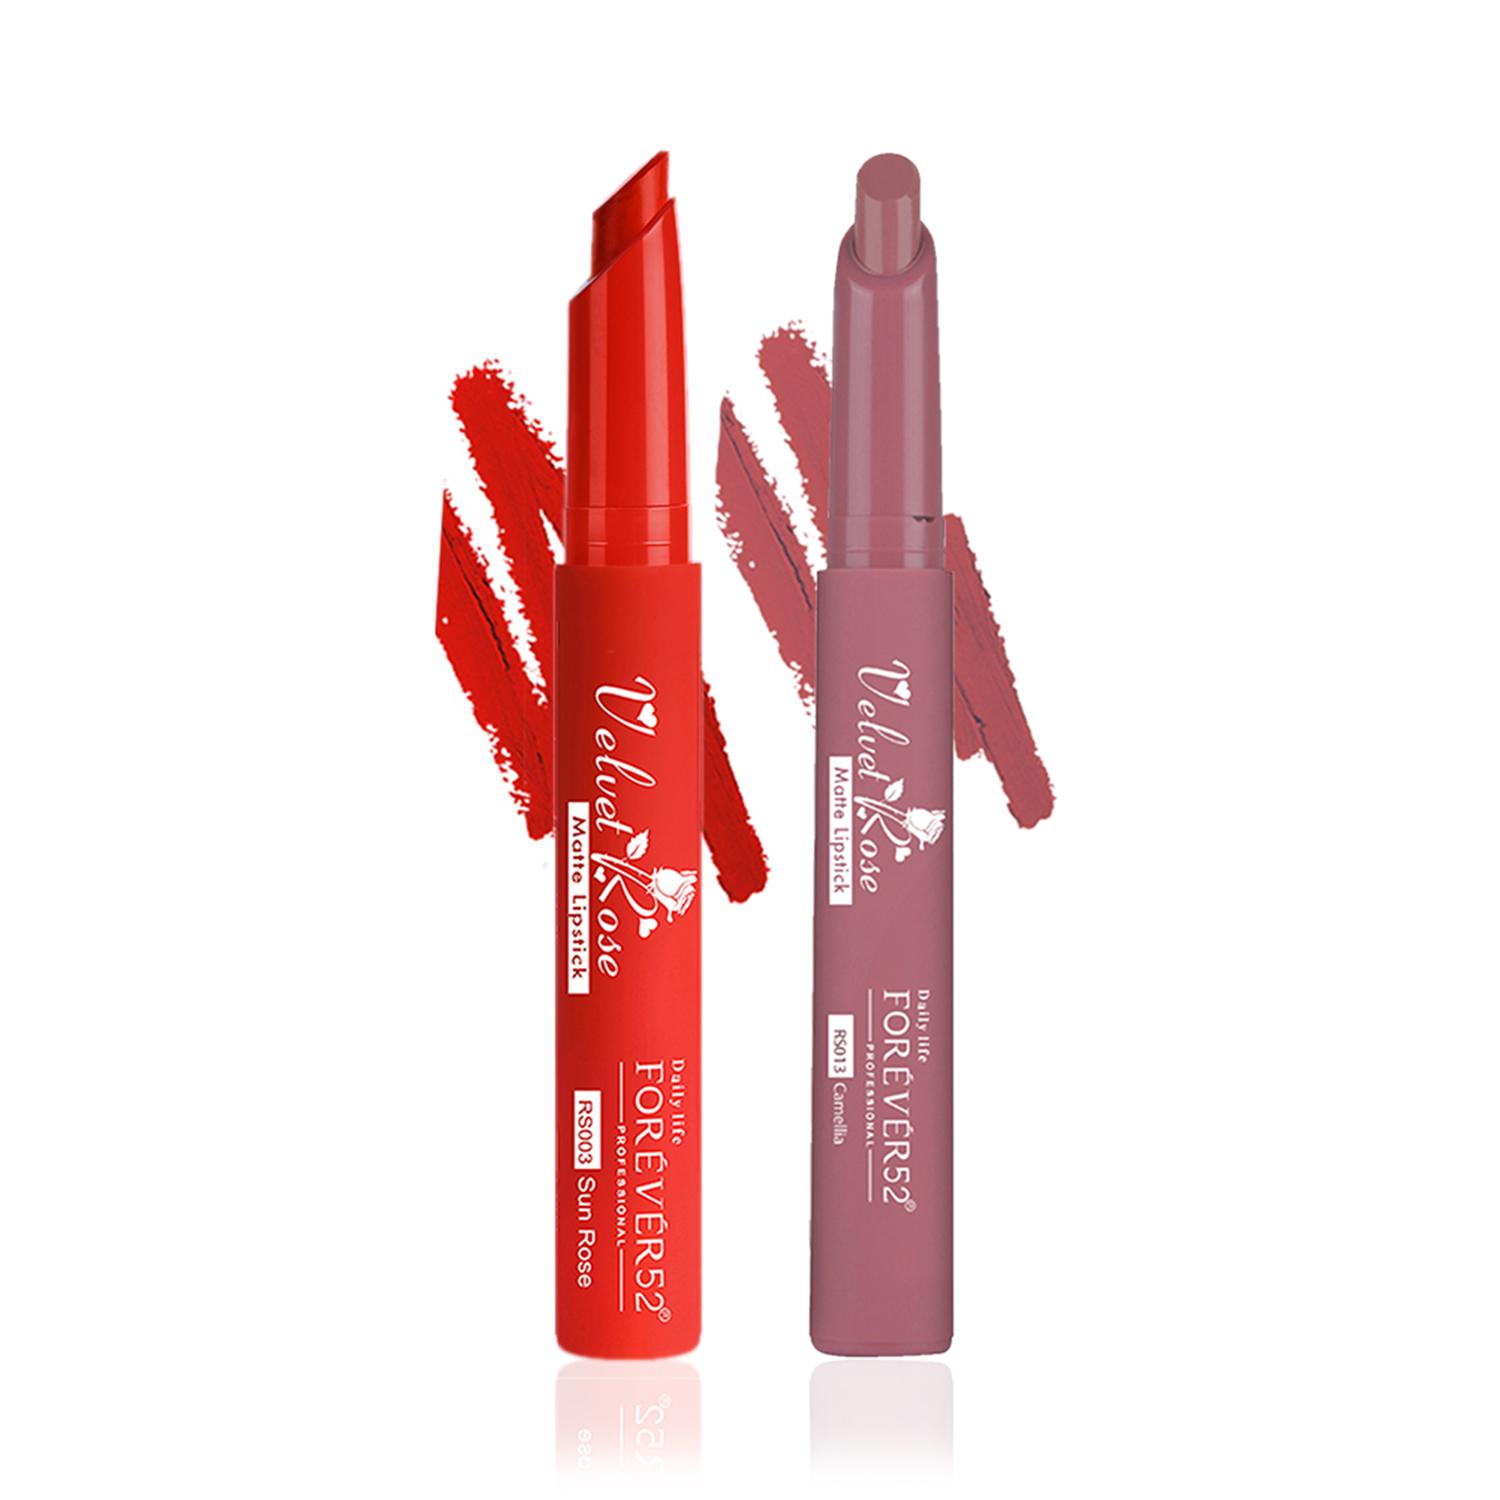 Daily Life Forever52 | Daily Life Forever52 Velvet Rose Matte Lipstick Set of 2 Crayons Combo (Sun Rose,Camellia)